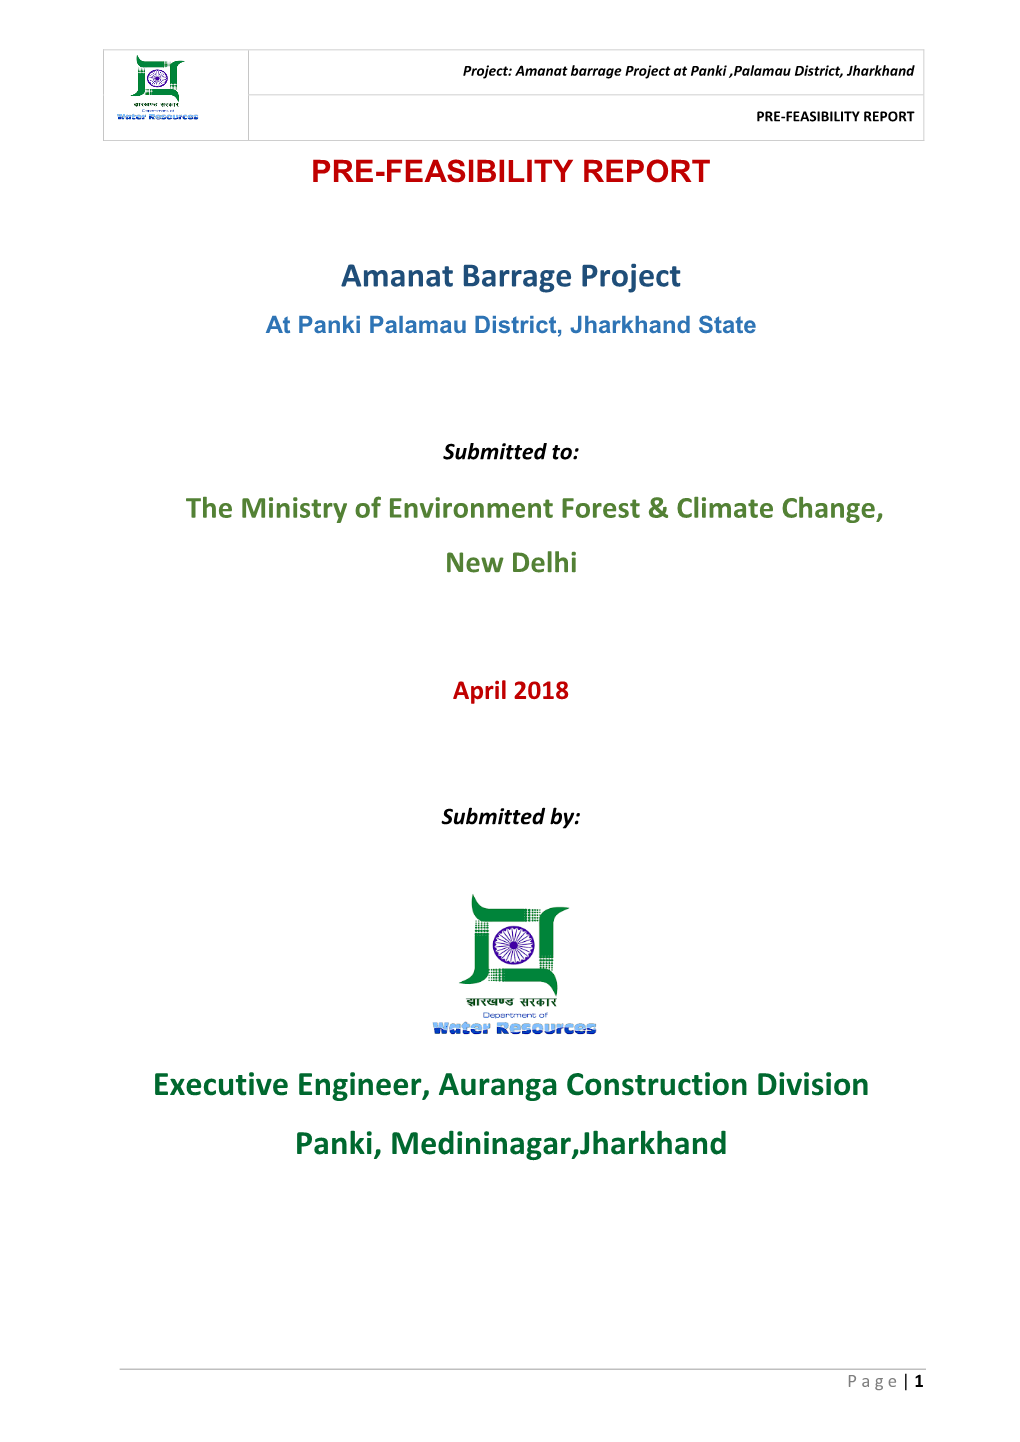 Amanat Barrage Project Executive Engineer, Auranga Construction